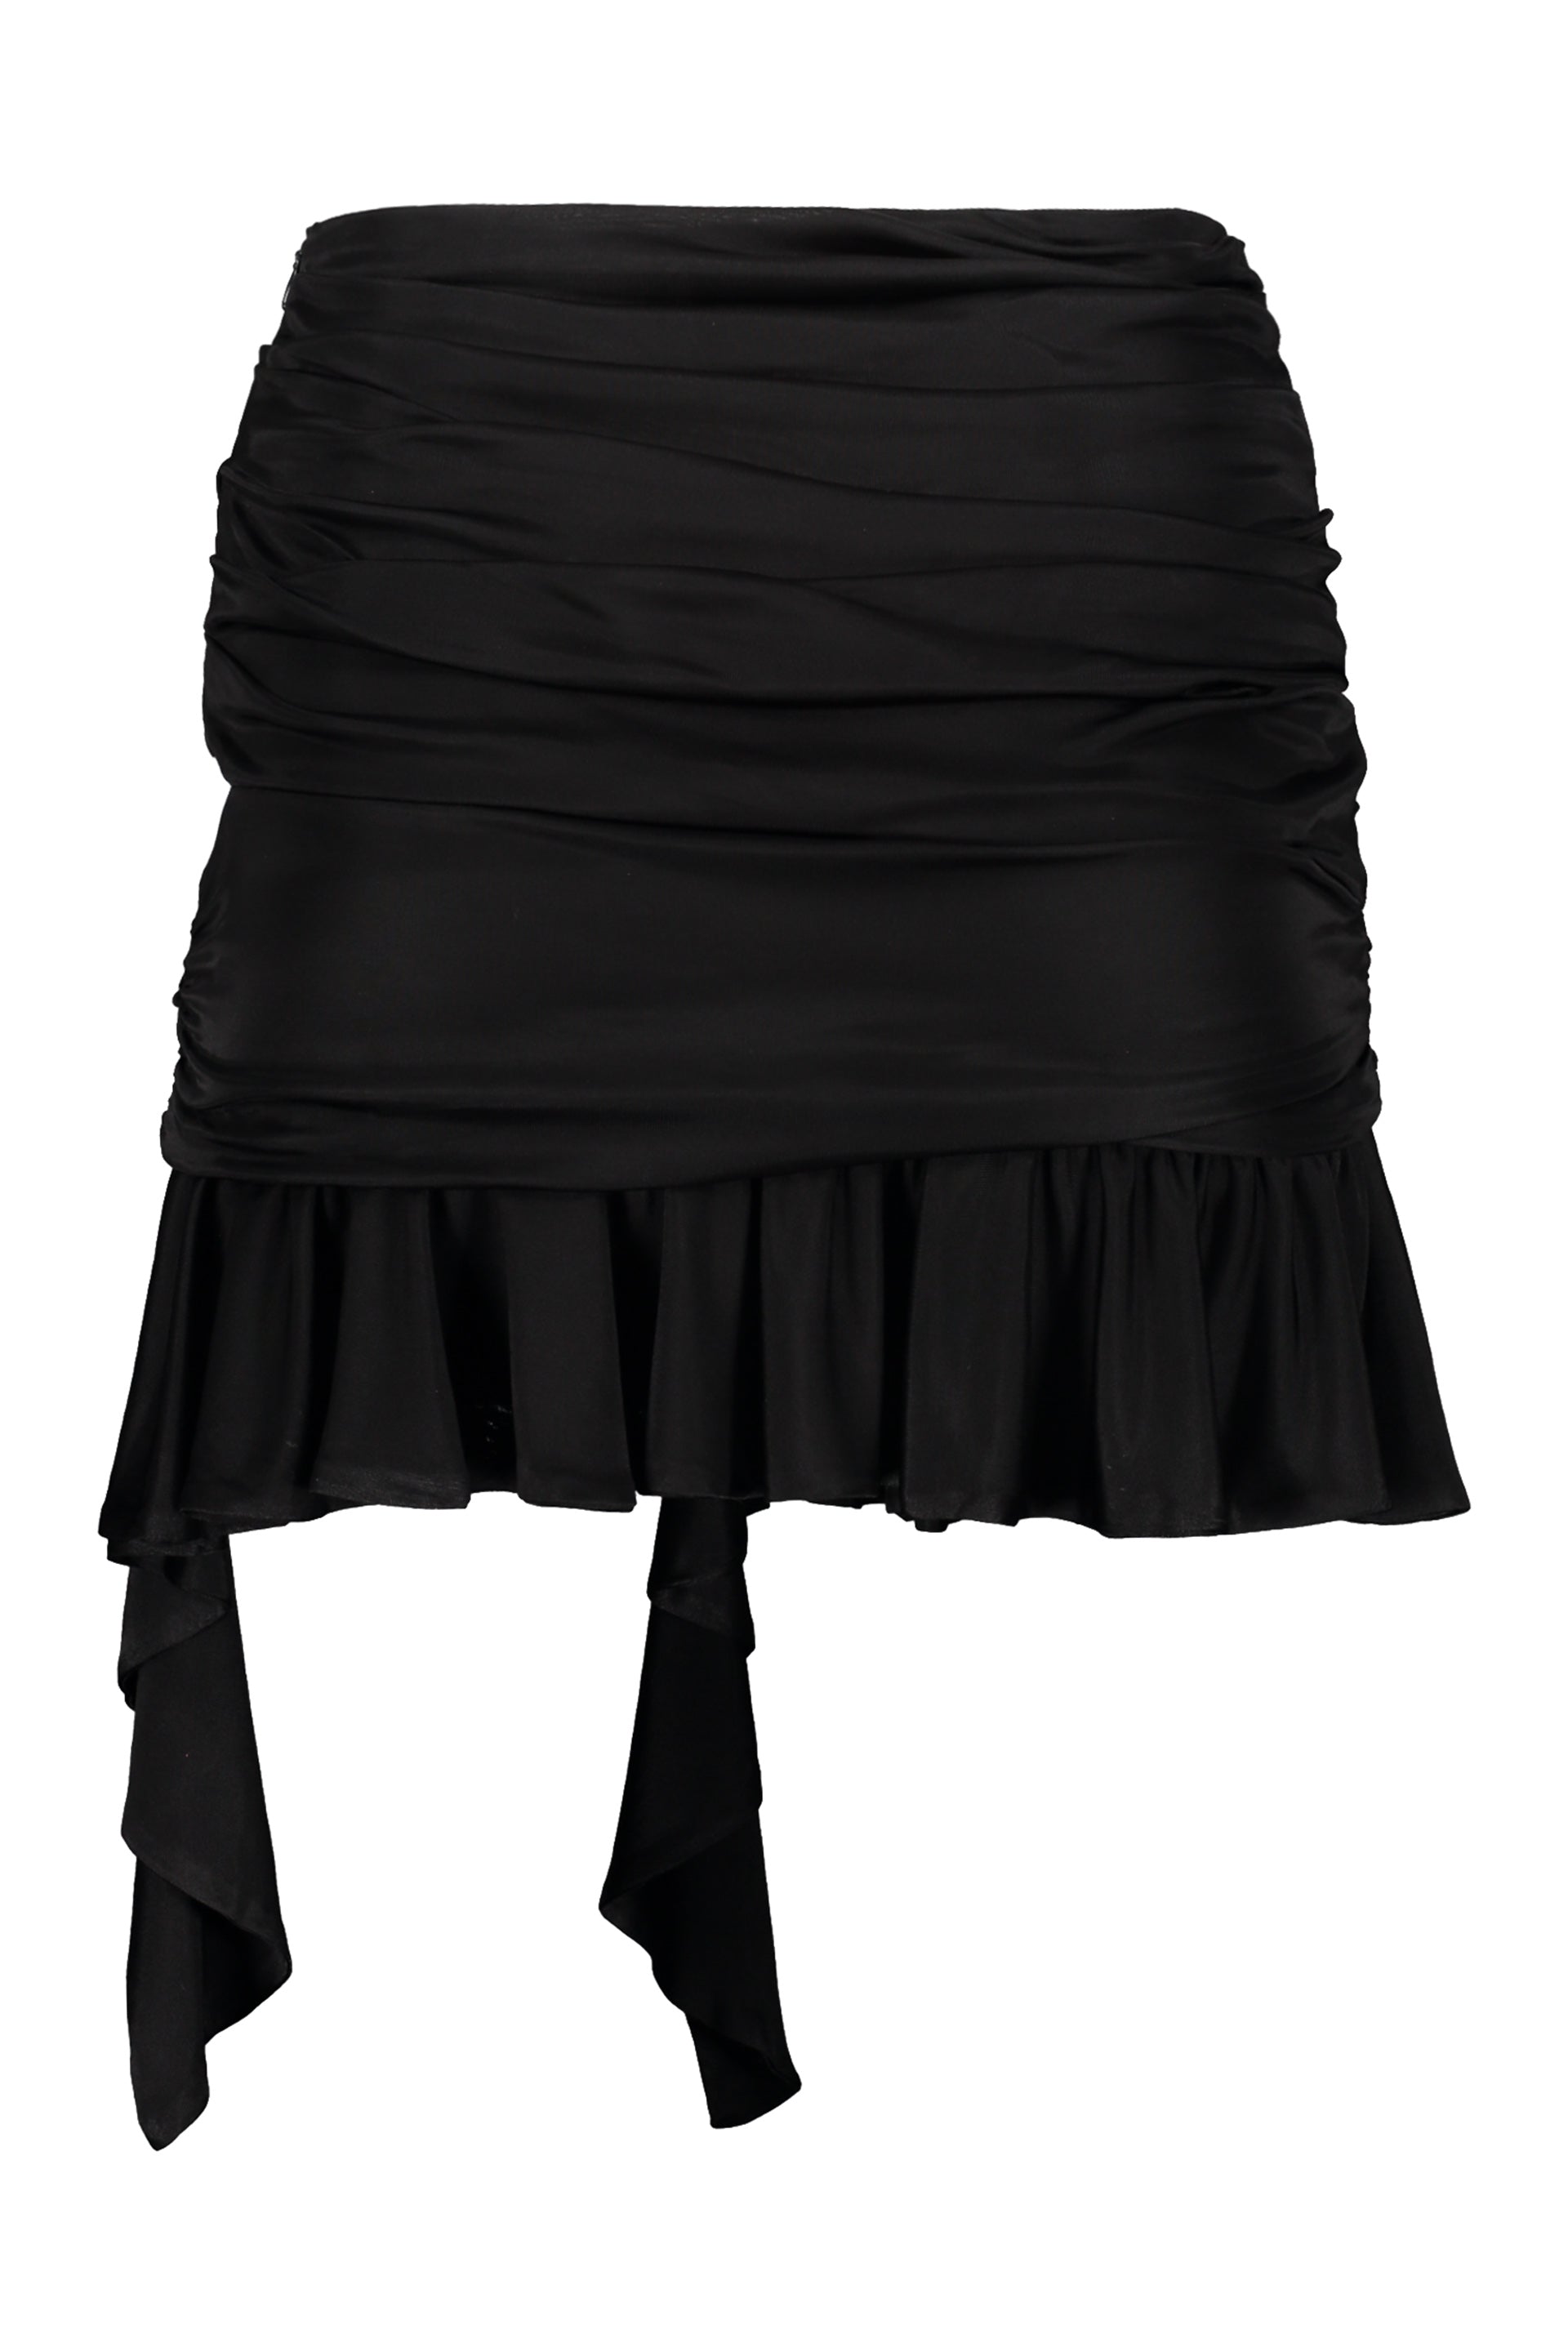 ANDREADAMO-OUTLET-SALE-Ruffled-mini-skirt-Kleider-Rocke-ARCHIVE-COLLECTION-2.jpg